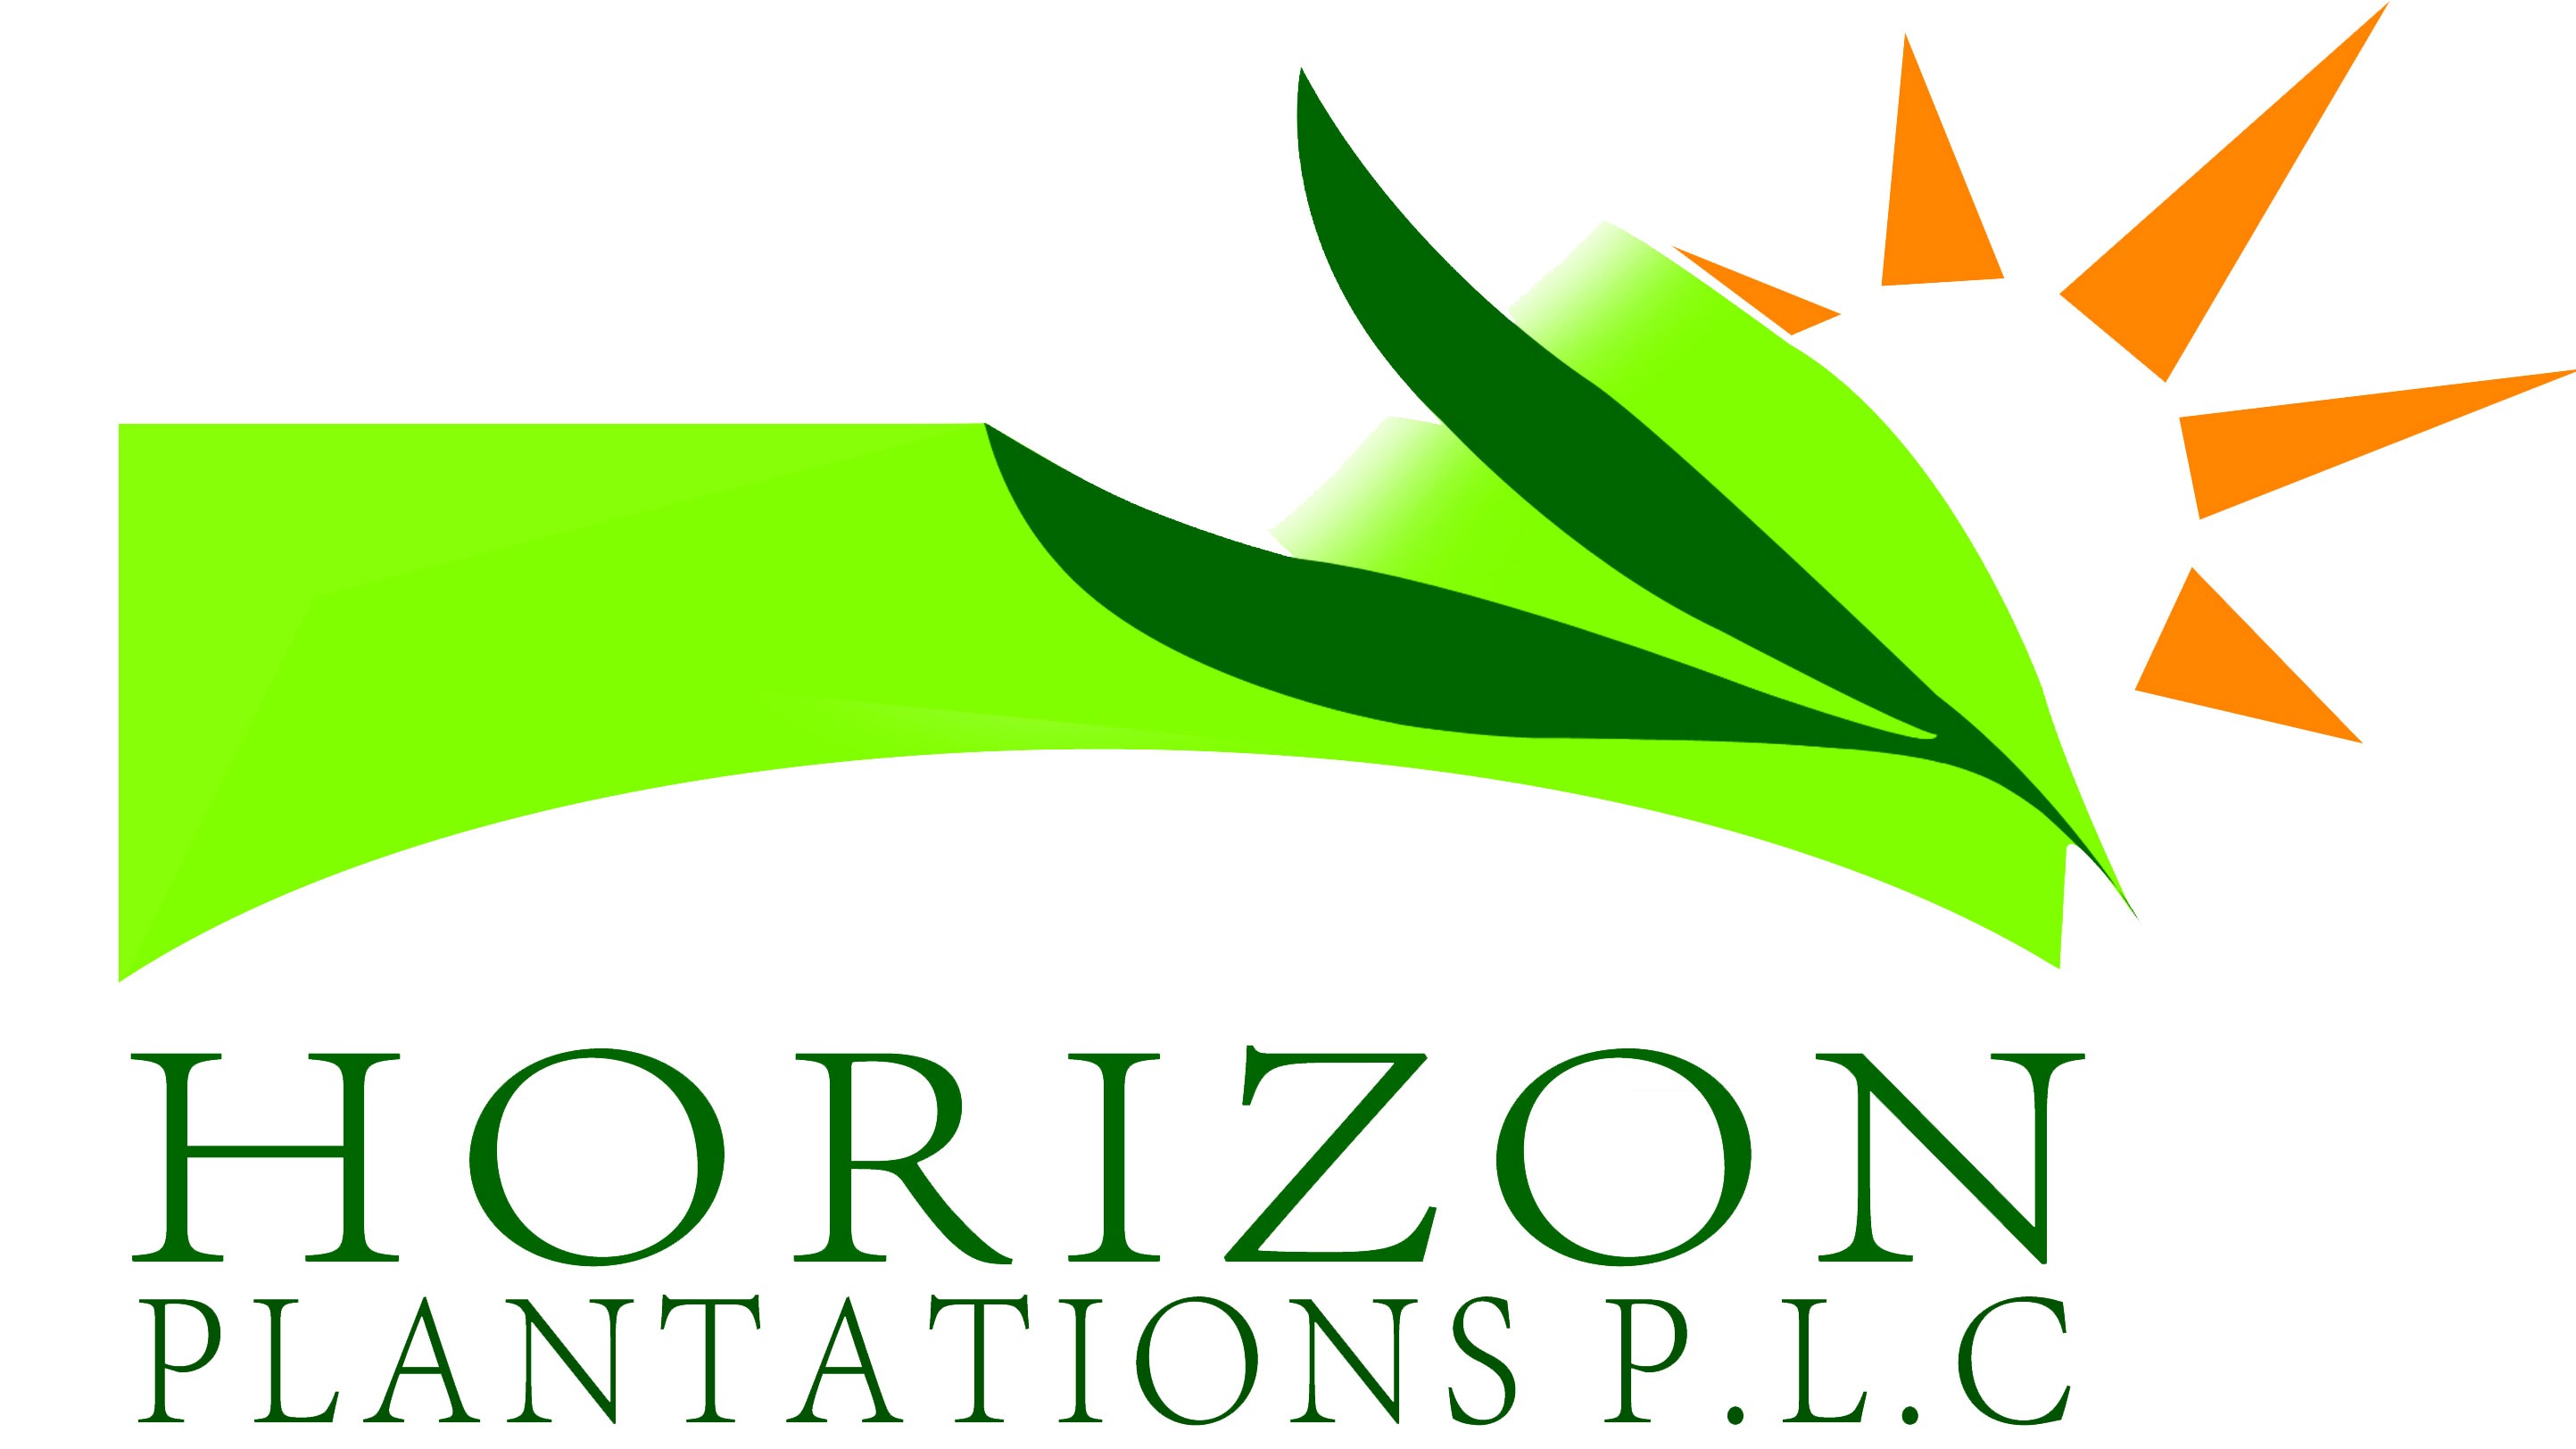 Horizon plantation